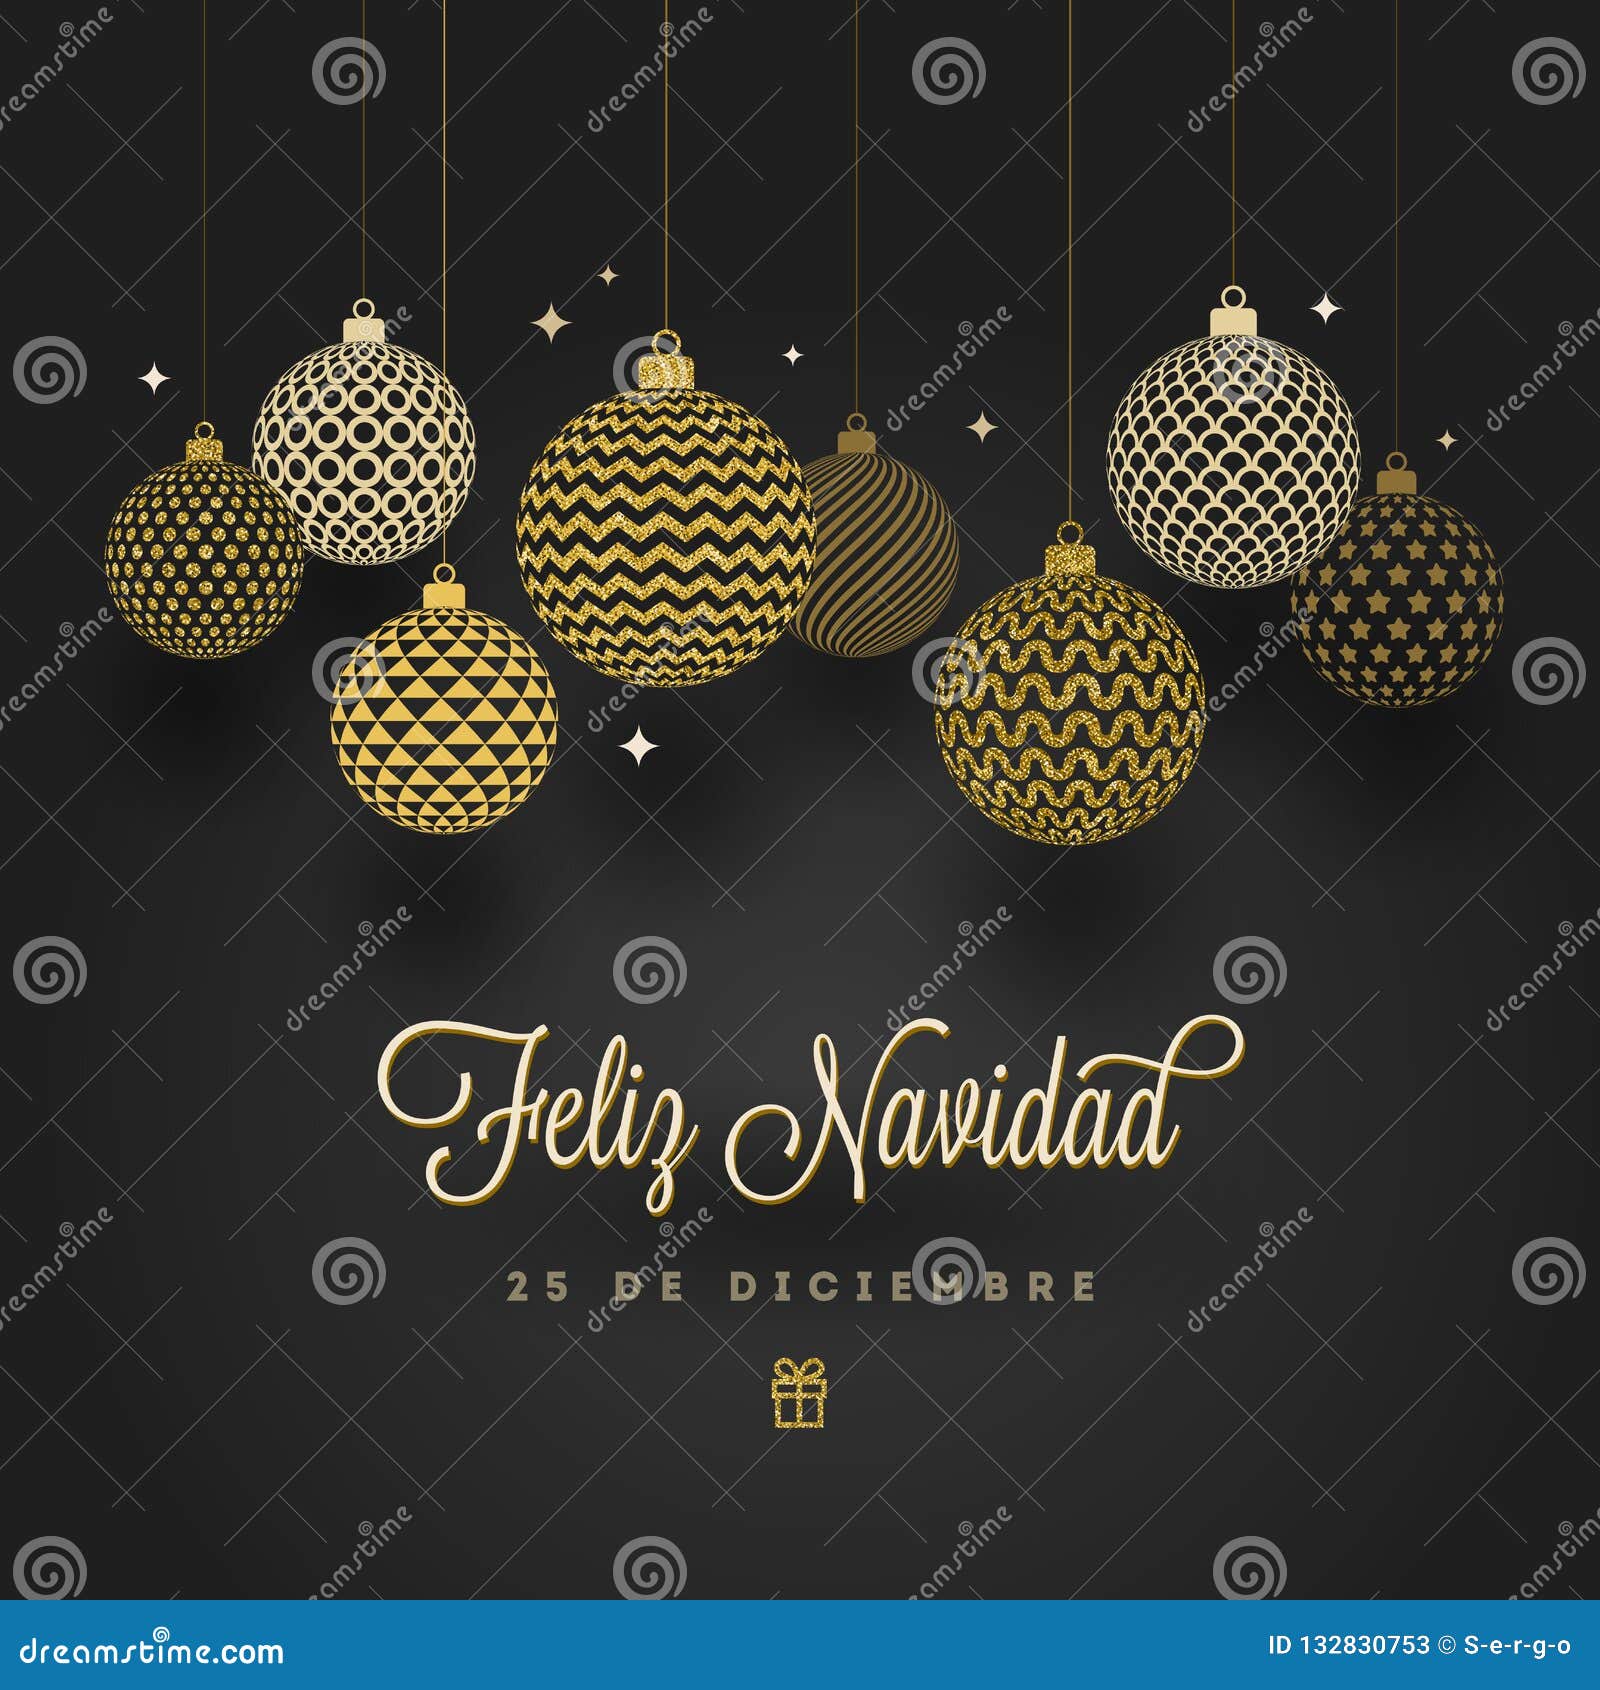 feliz navidad - christmas greetings in spanish. patterned golden baubles on a black background.